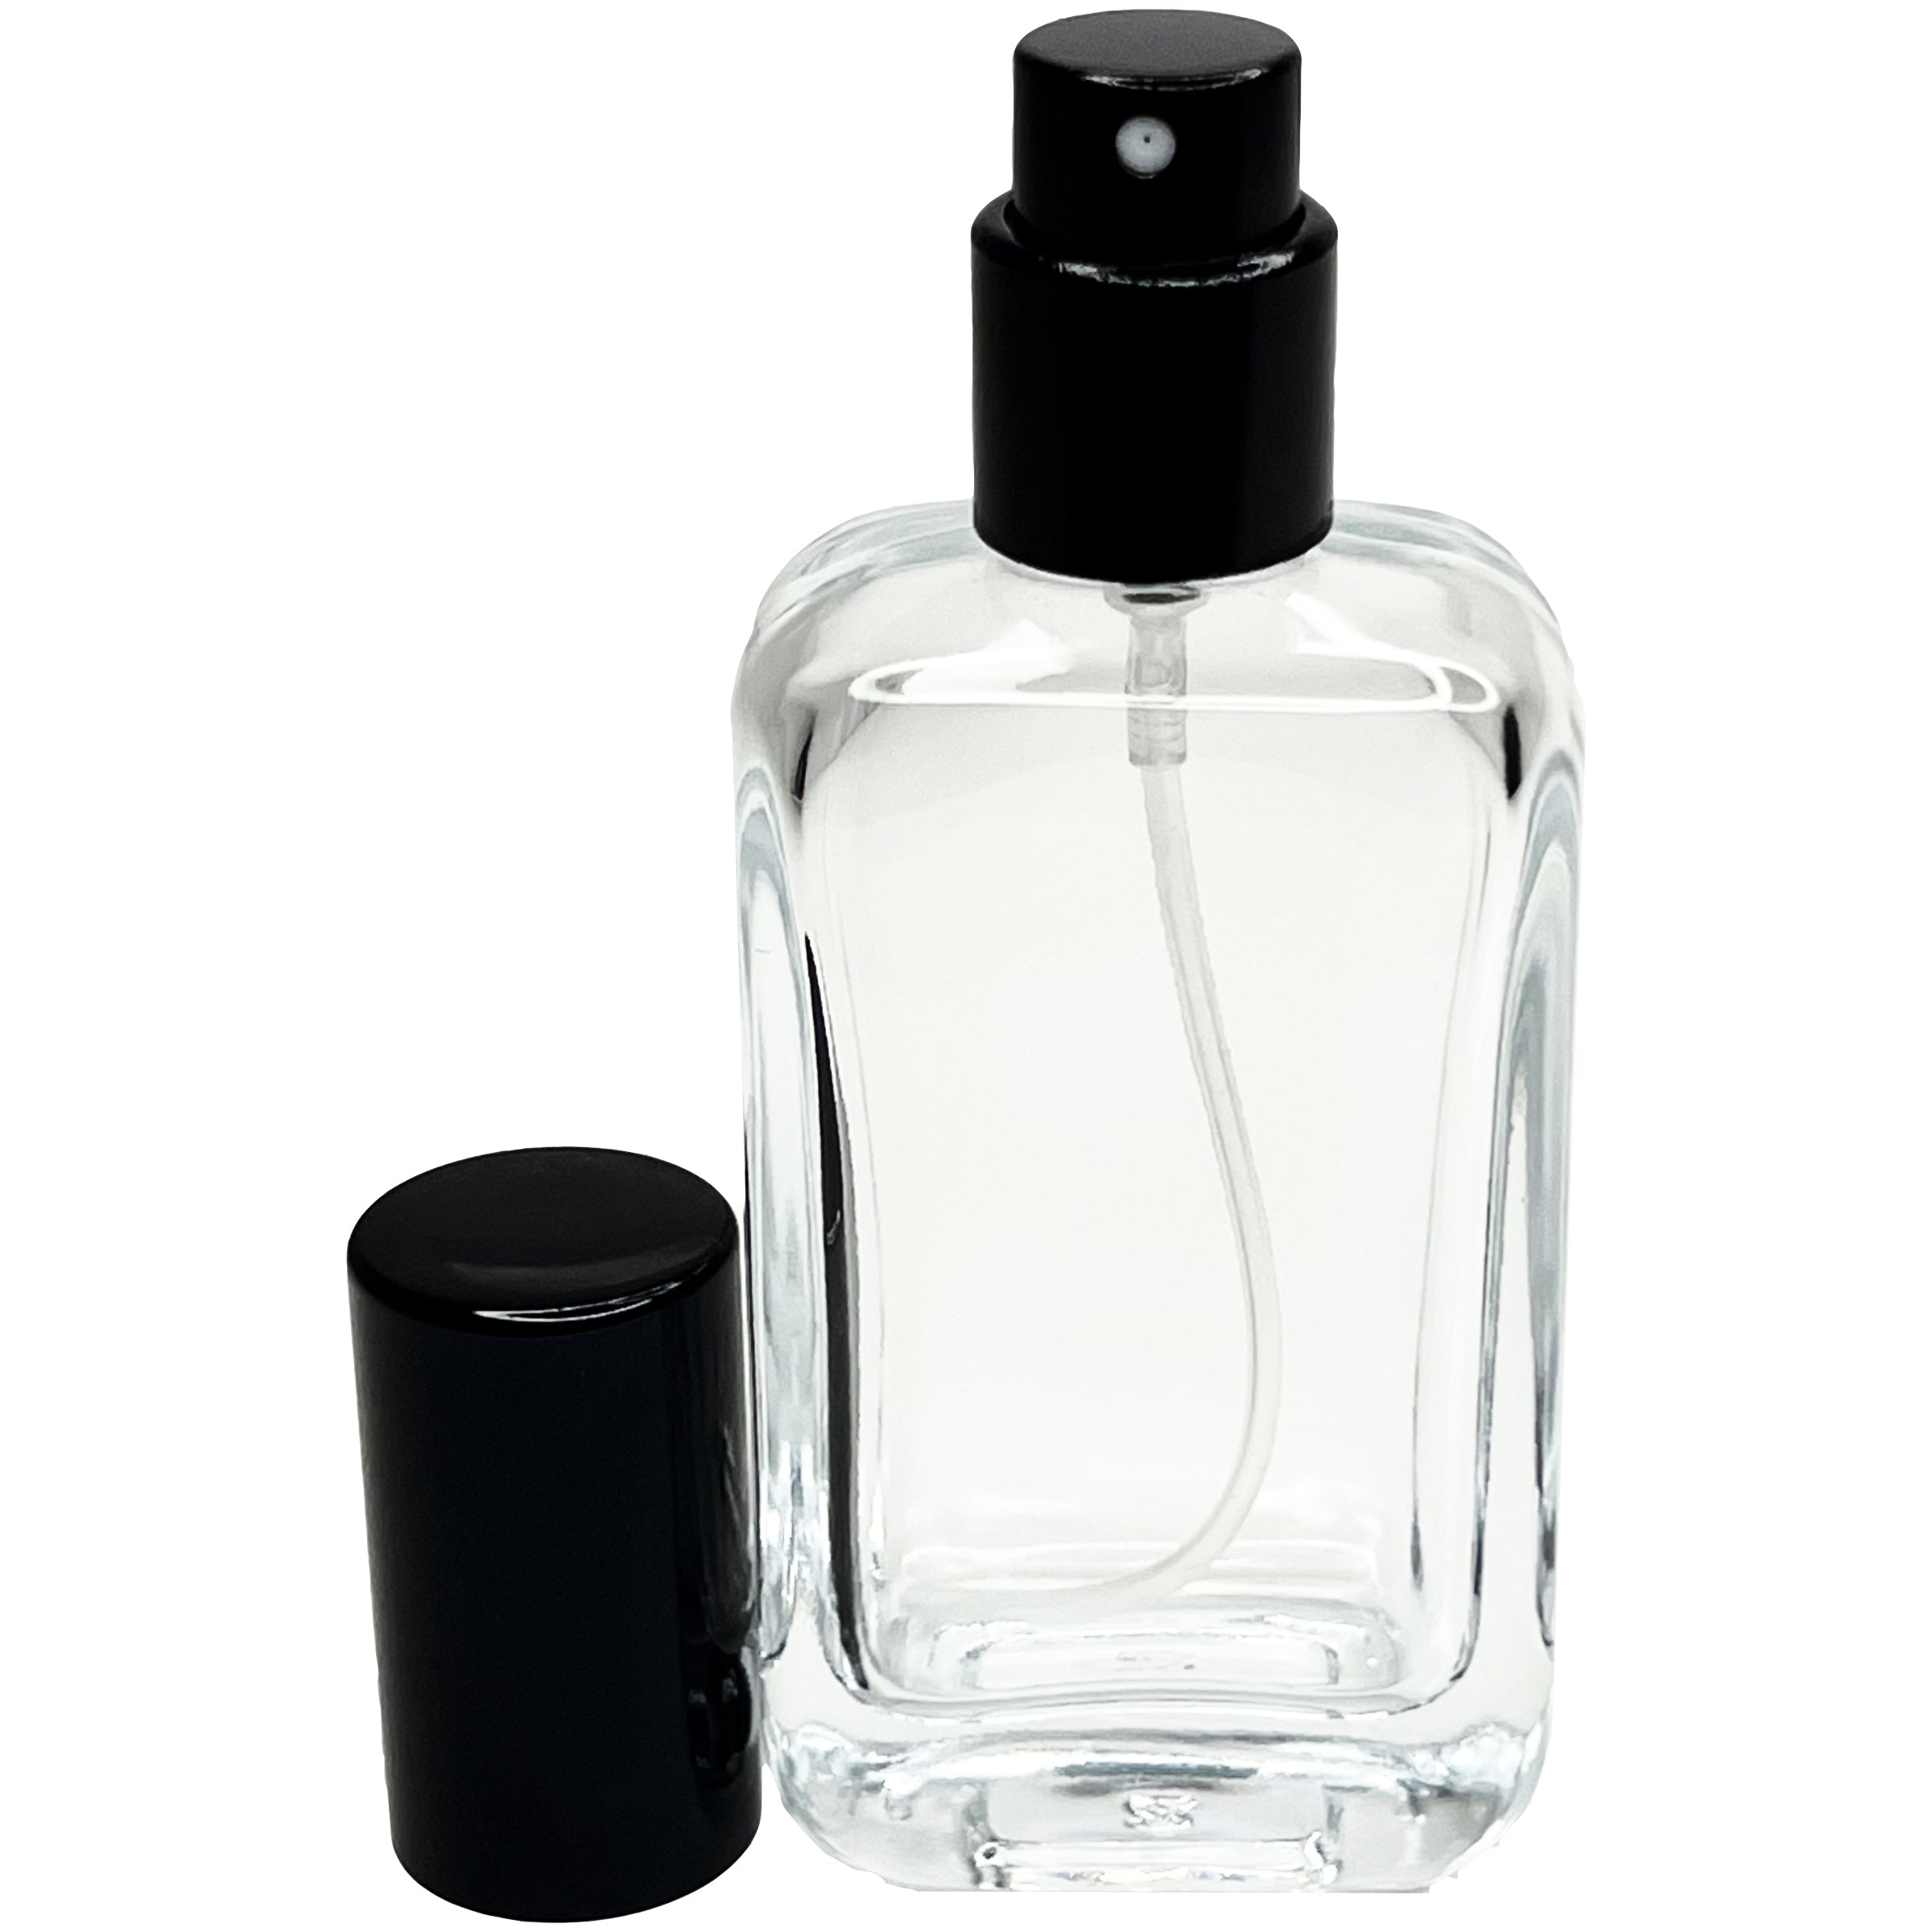 30ml 1oz Perfume Rounded Glass Spray Bottles Black cap